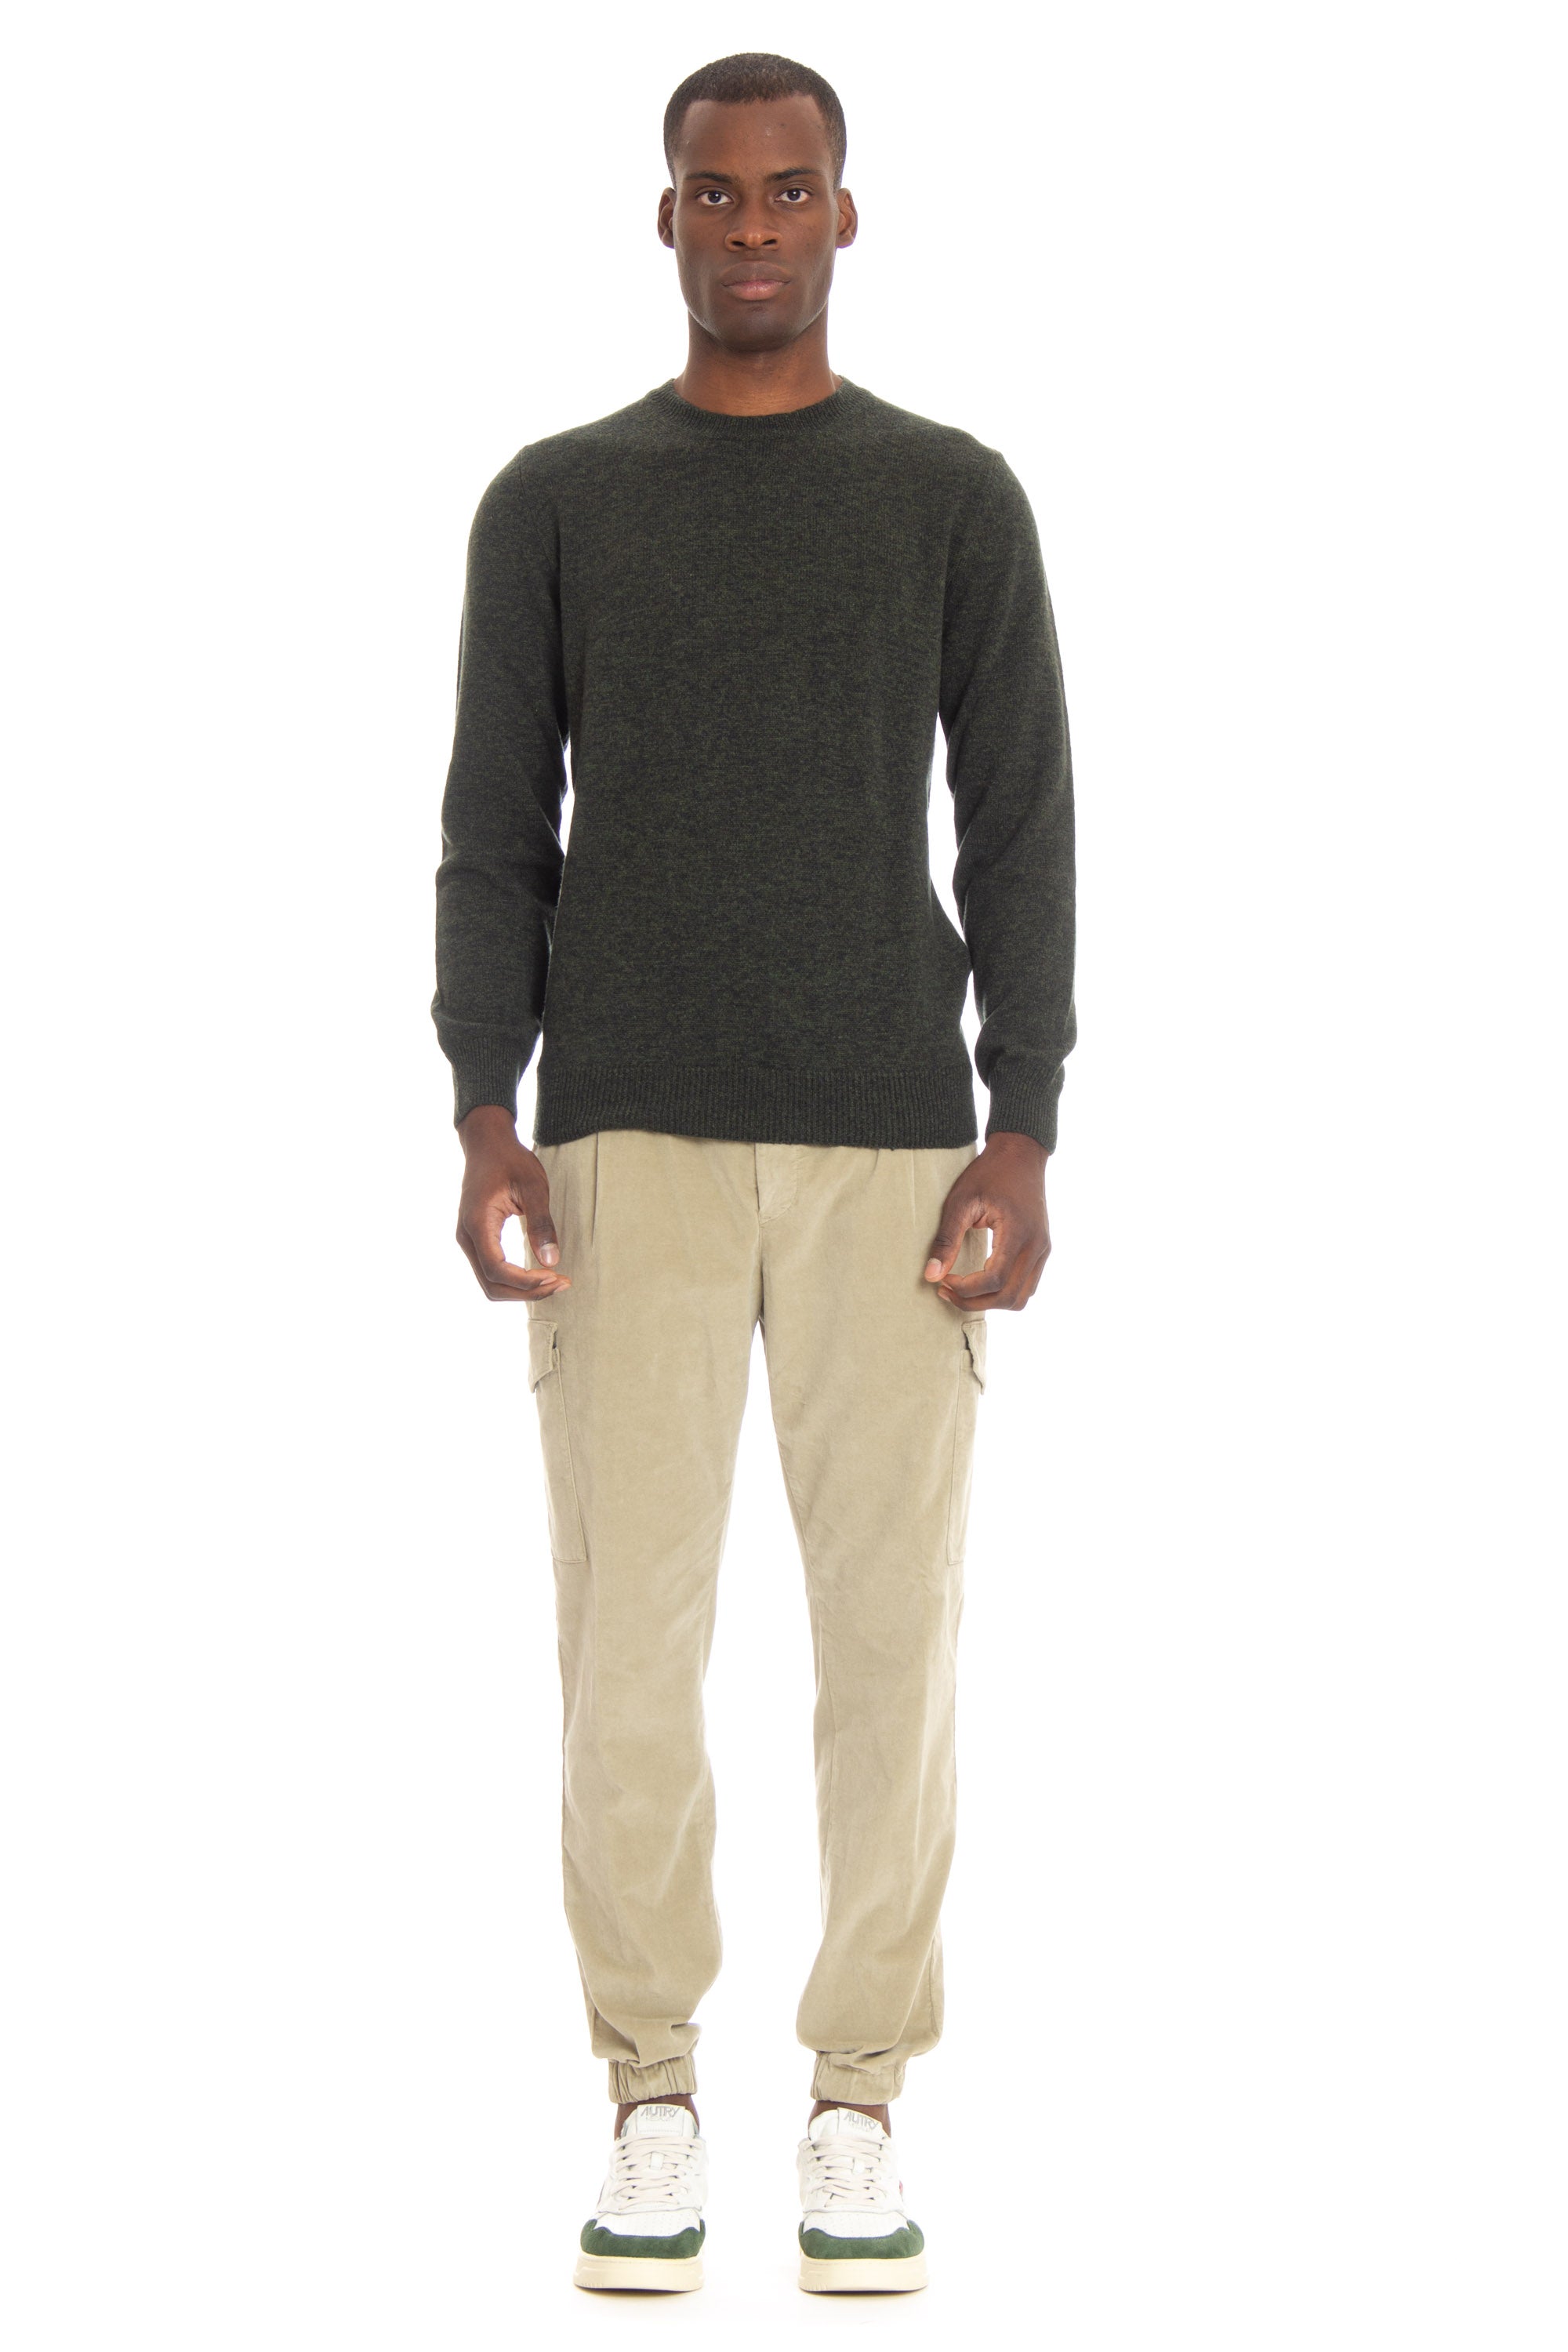 Crew-neck sweater in 7 gauge upperwool wool